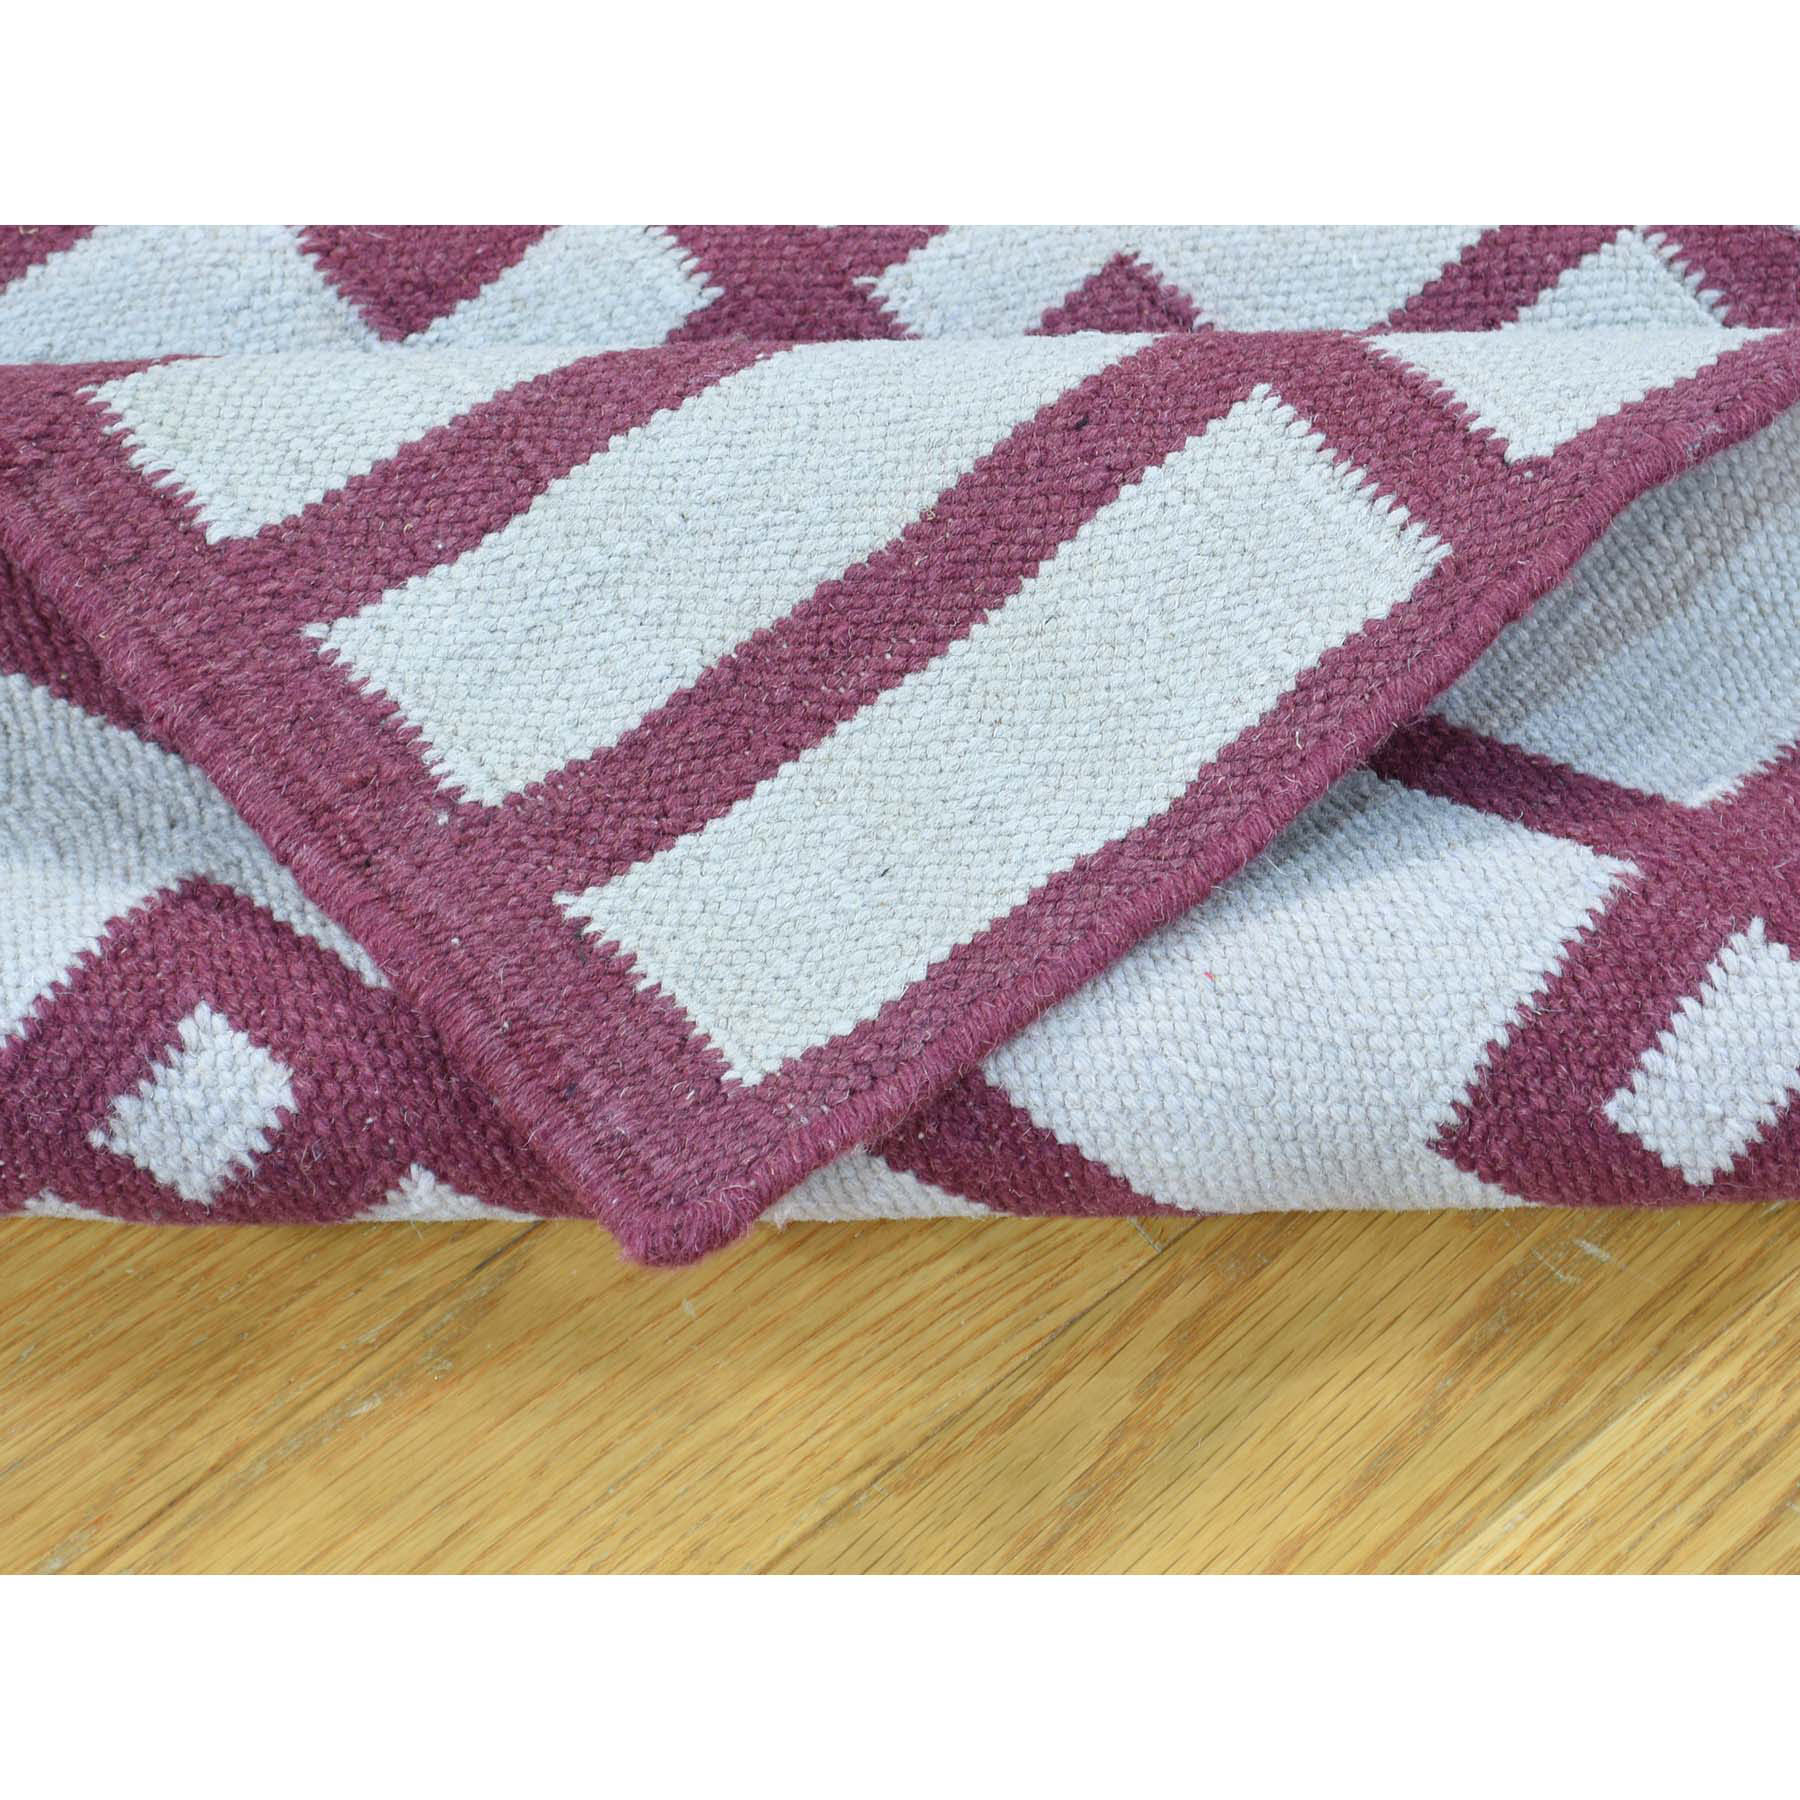 2'5"x6'1" Flat Weave Hand-Woven Reversible Kilim Oriental Runner Rug 